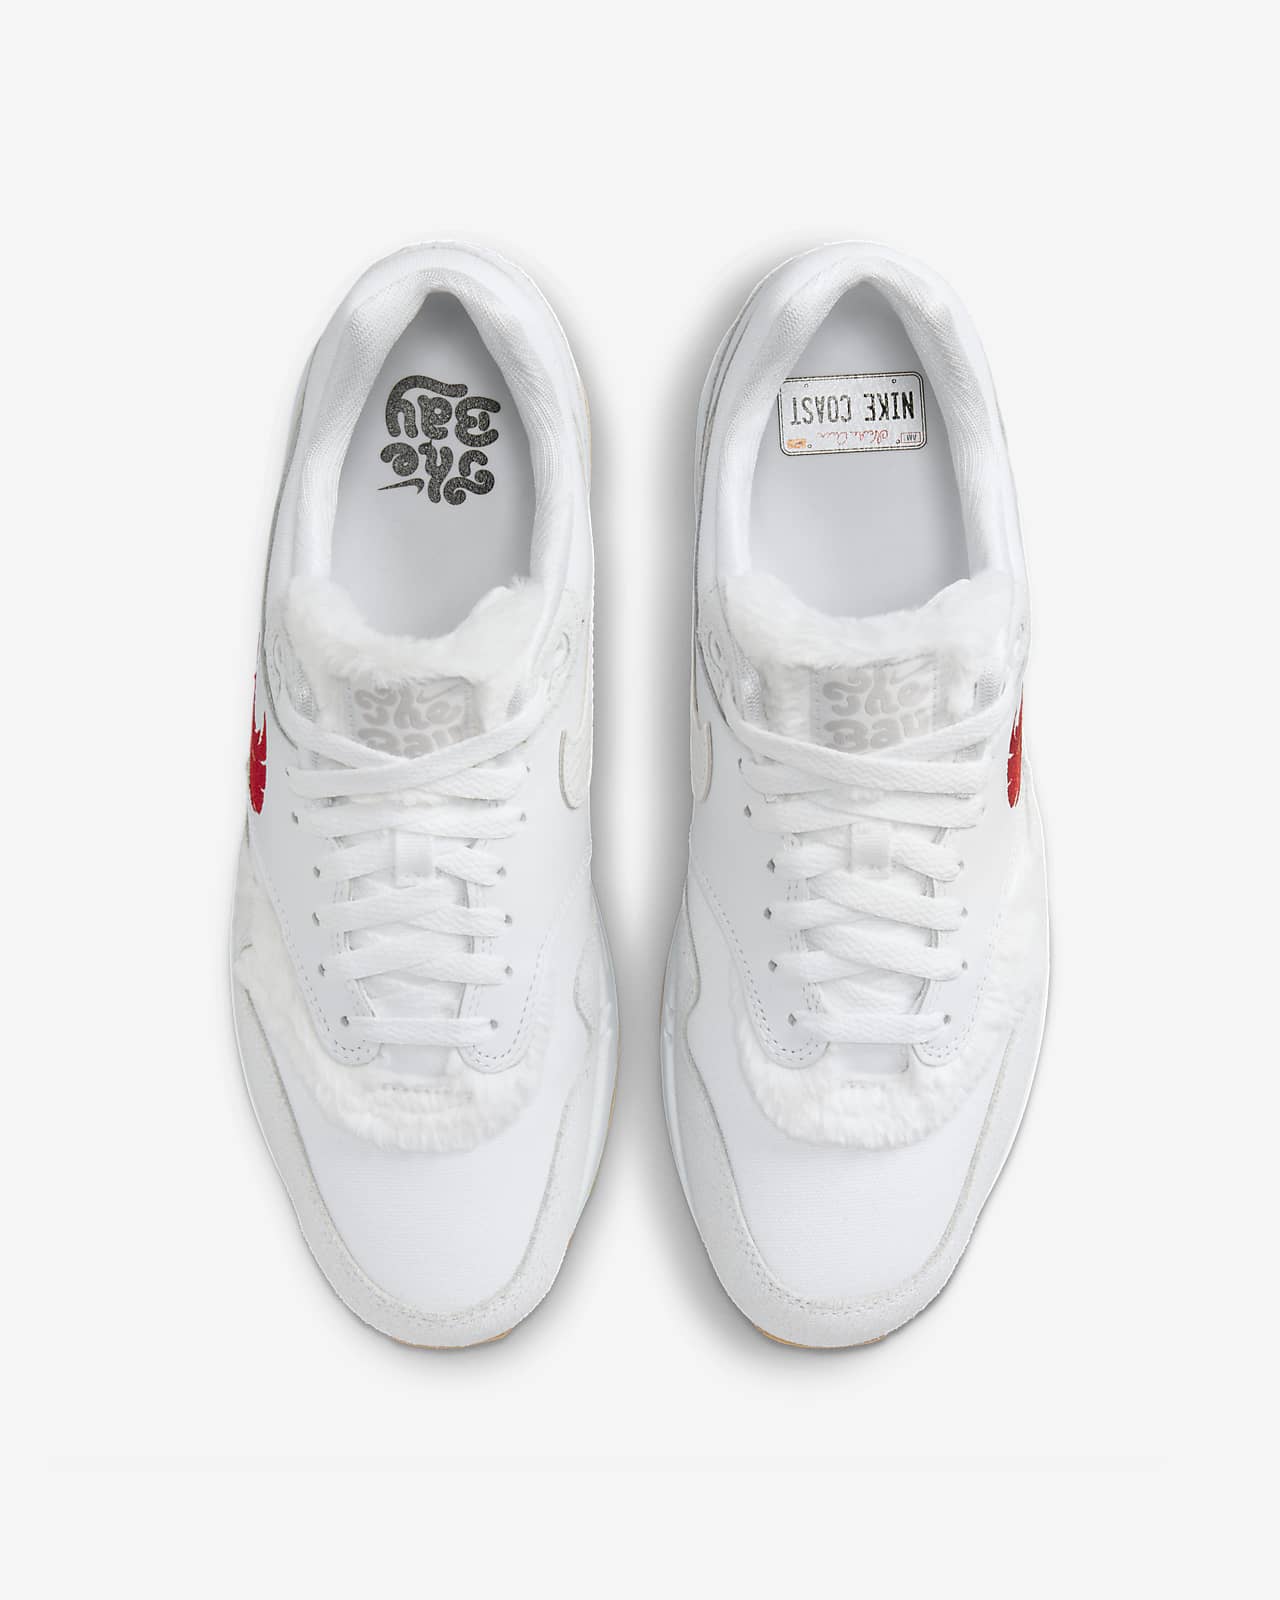 Nike AIR MAX 1 white pack